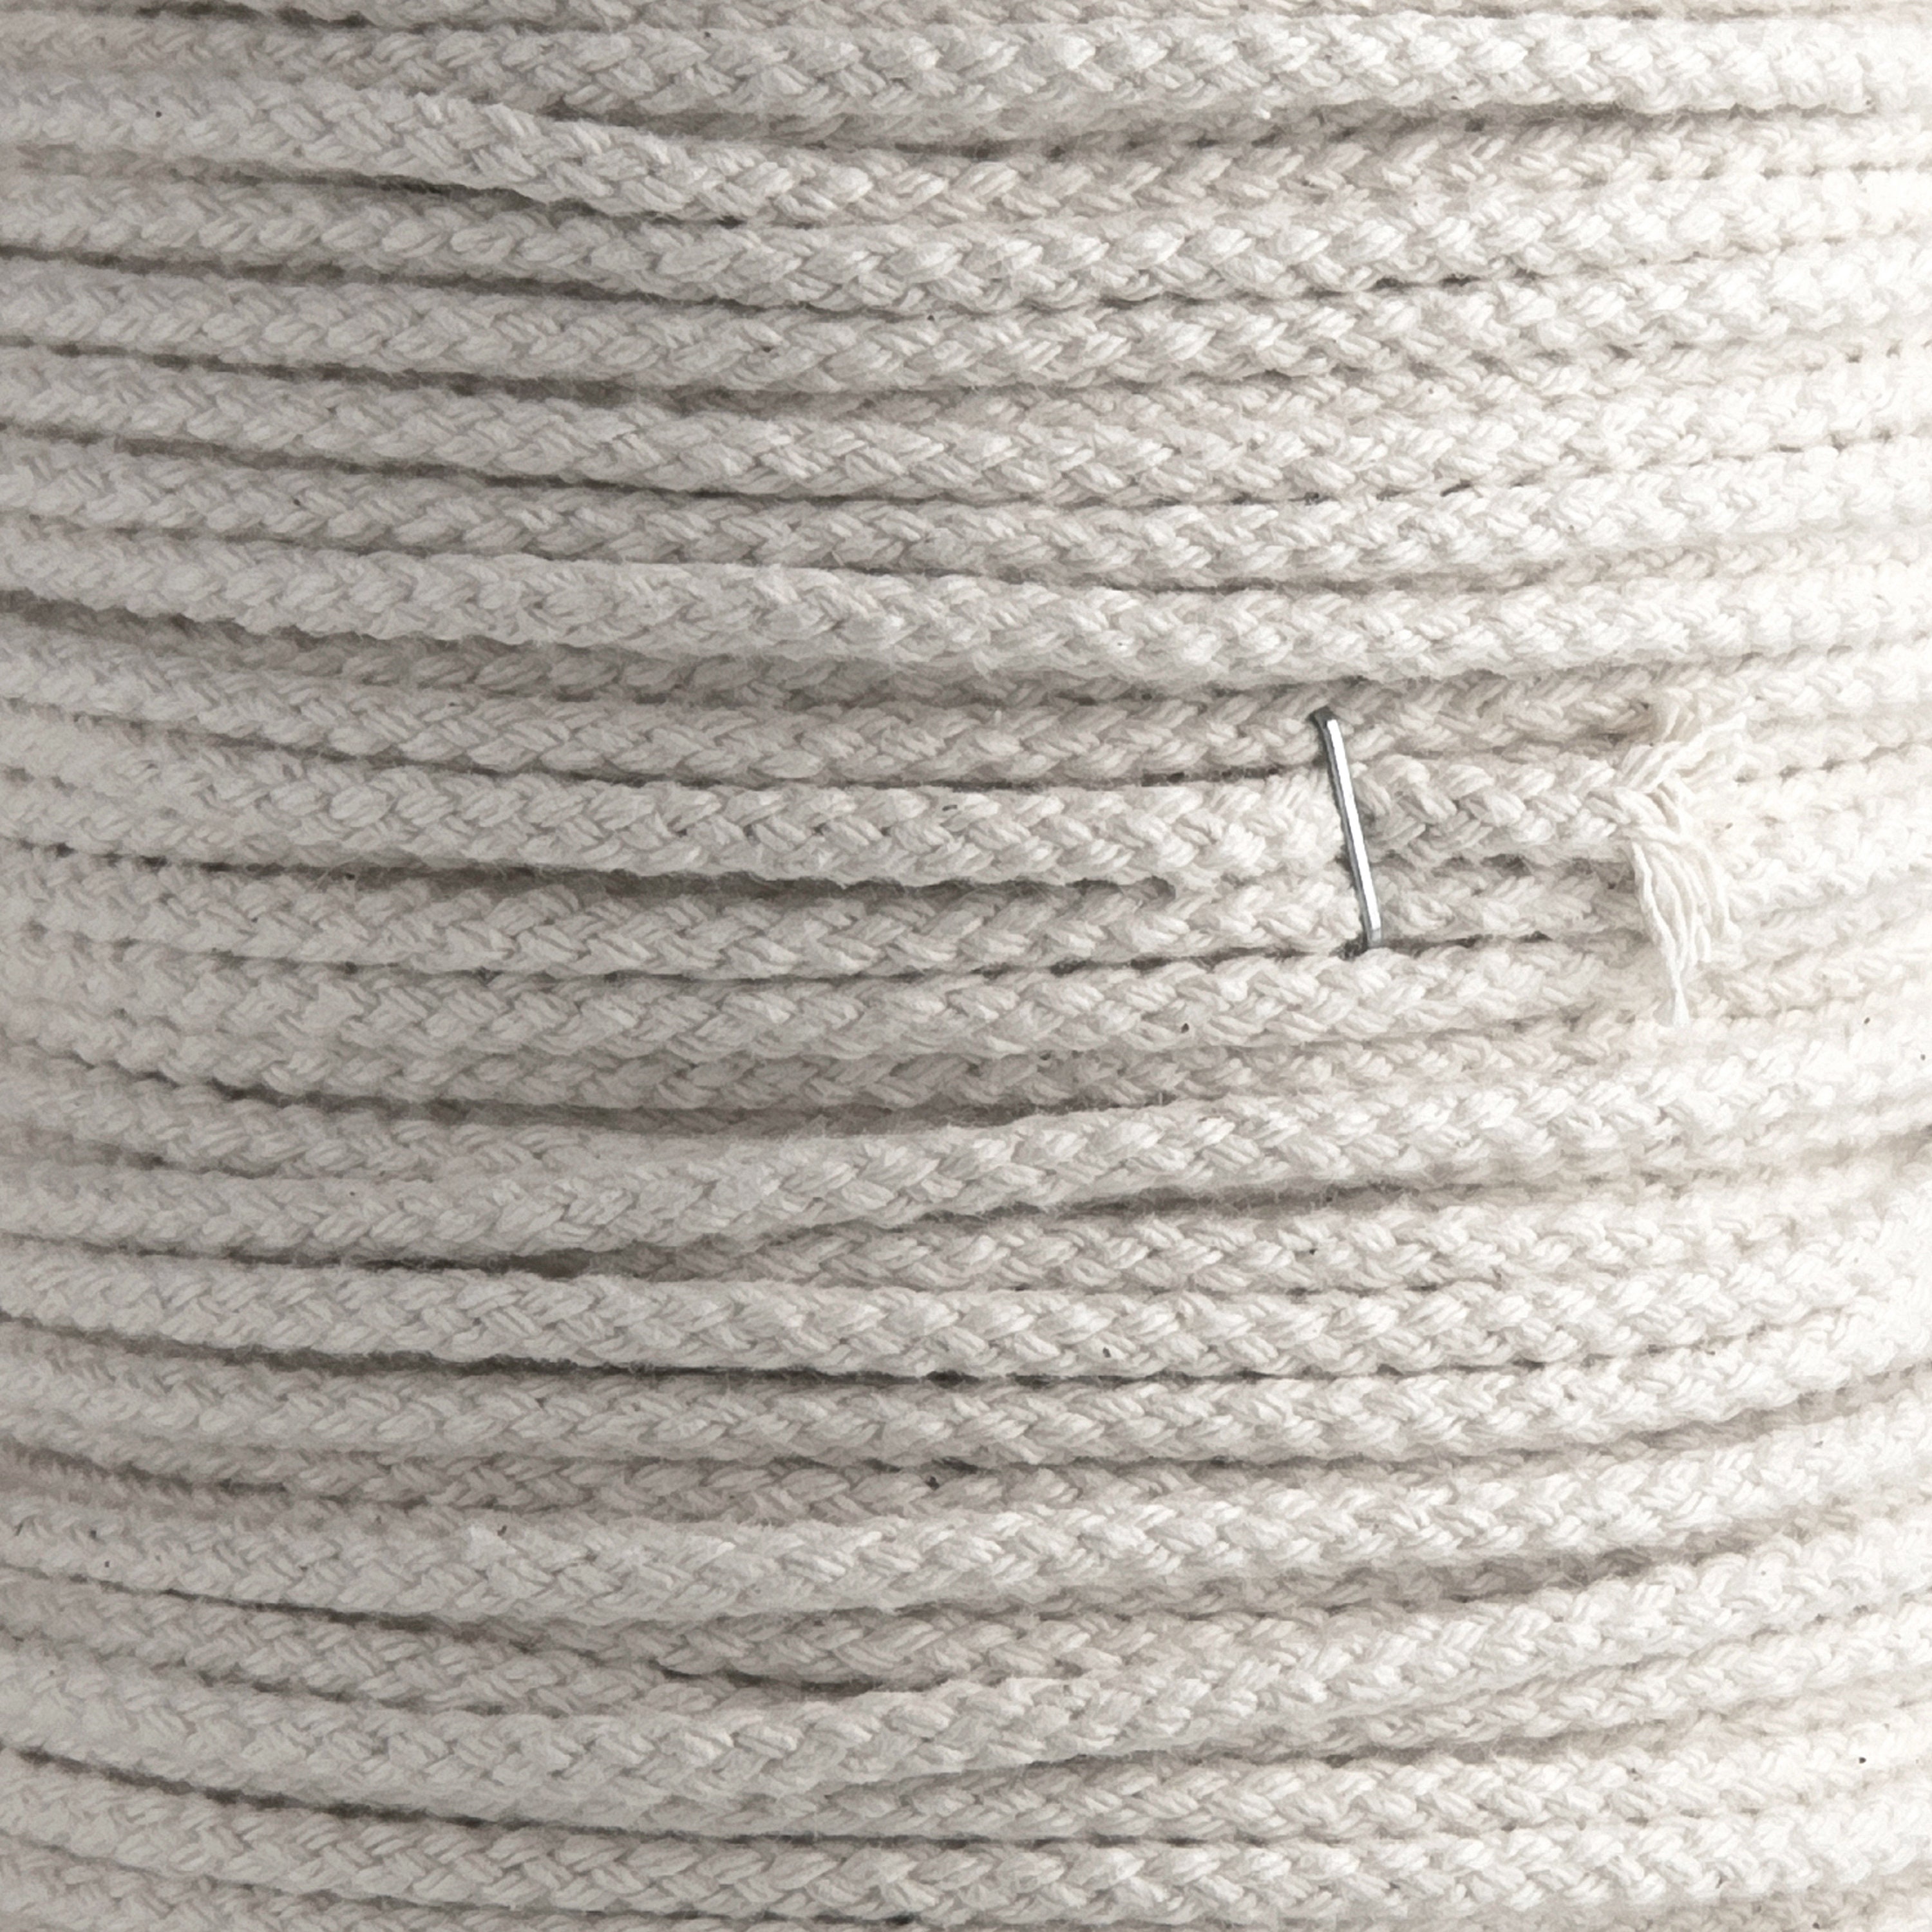 100m Cotton Crafts Rope Long/100Yard Cord String Macrame Home Textiles  Circular Knitting Needles Interchangeable Circular Knitting Needles Size 8 Circular  Knitting Needles Size 6 Circular Knitting 